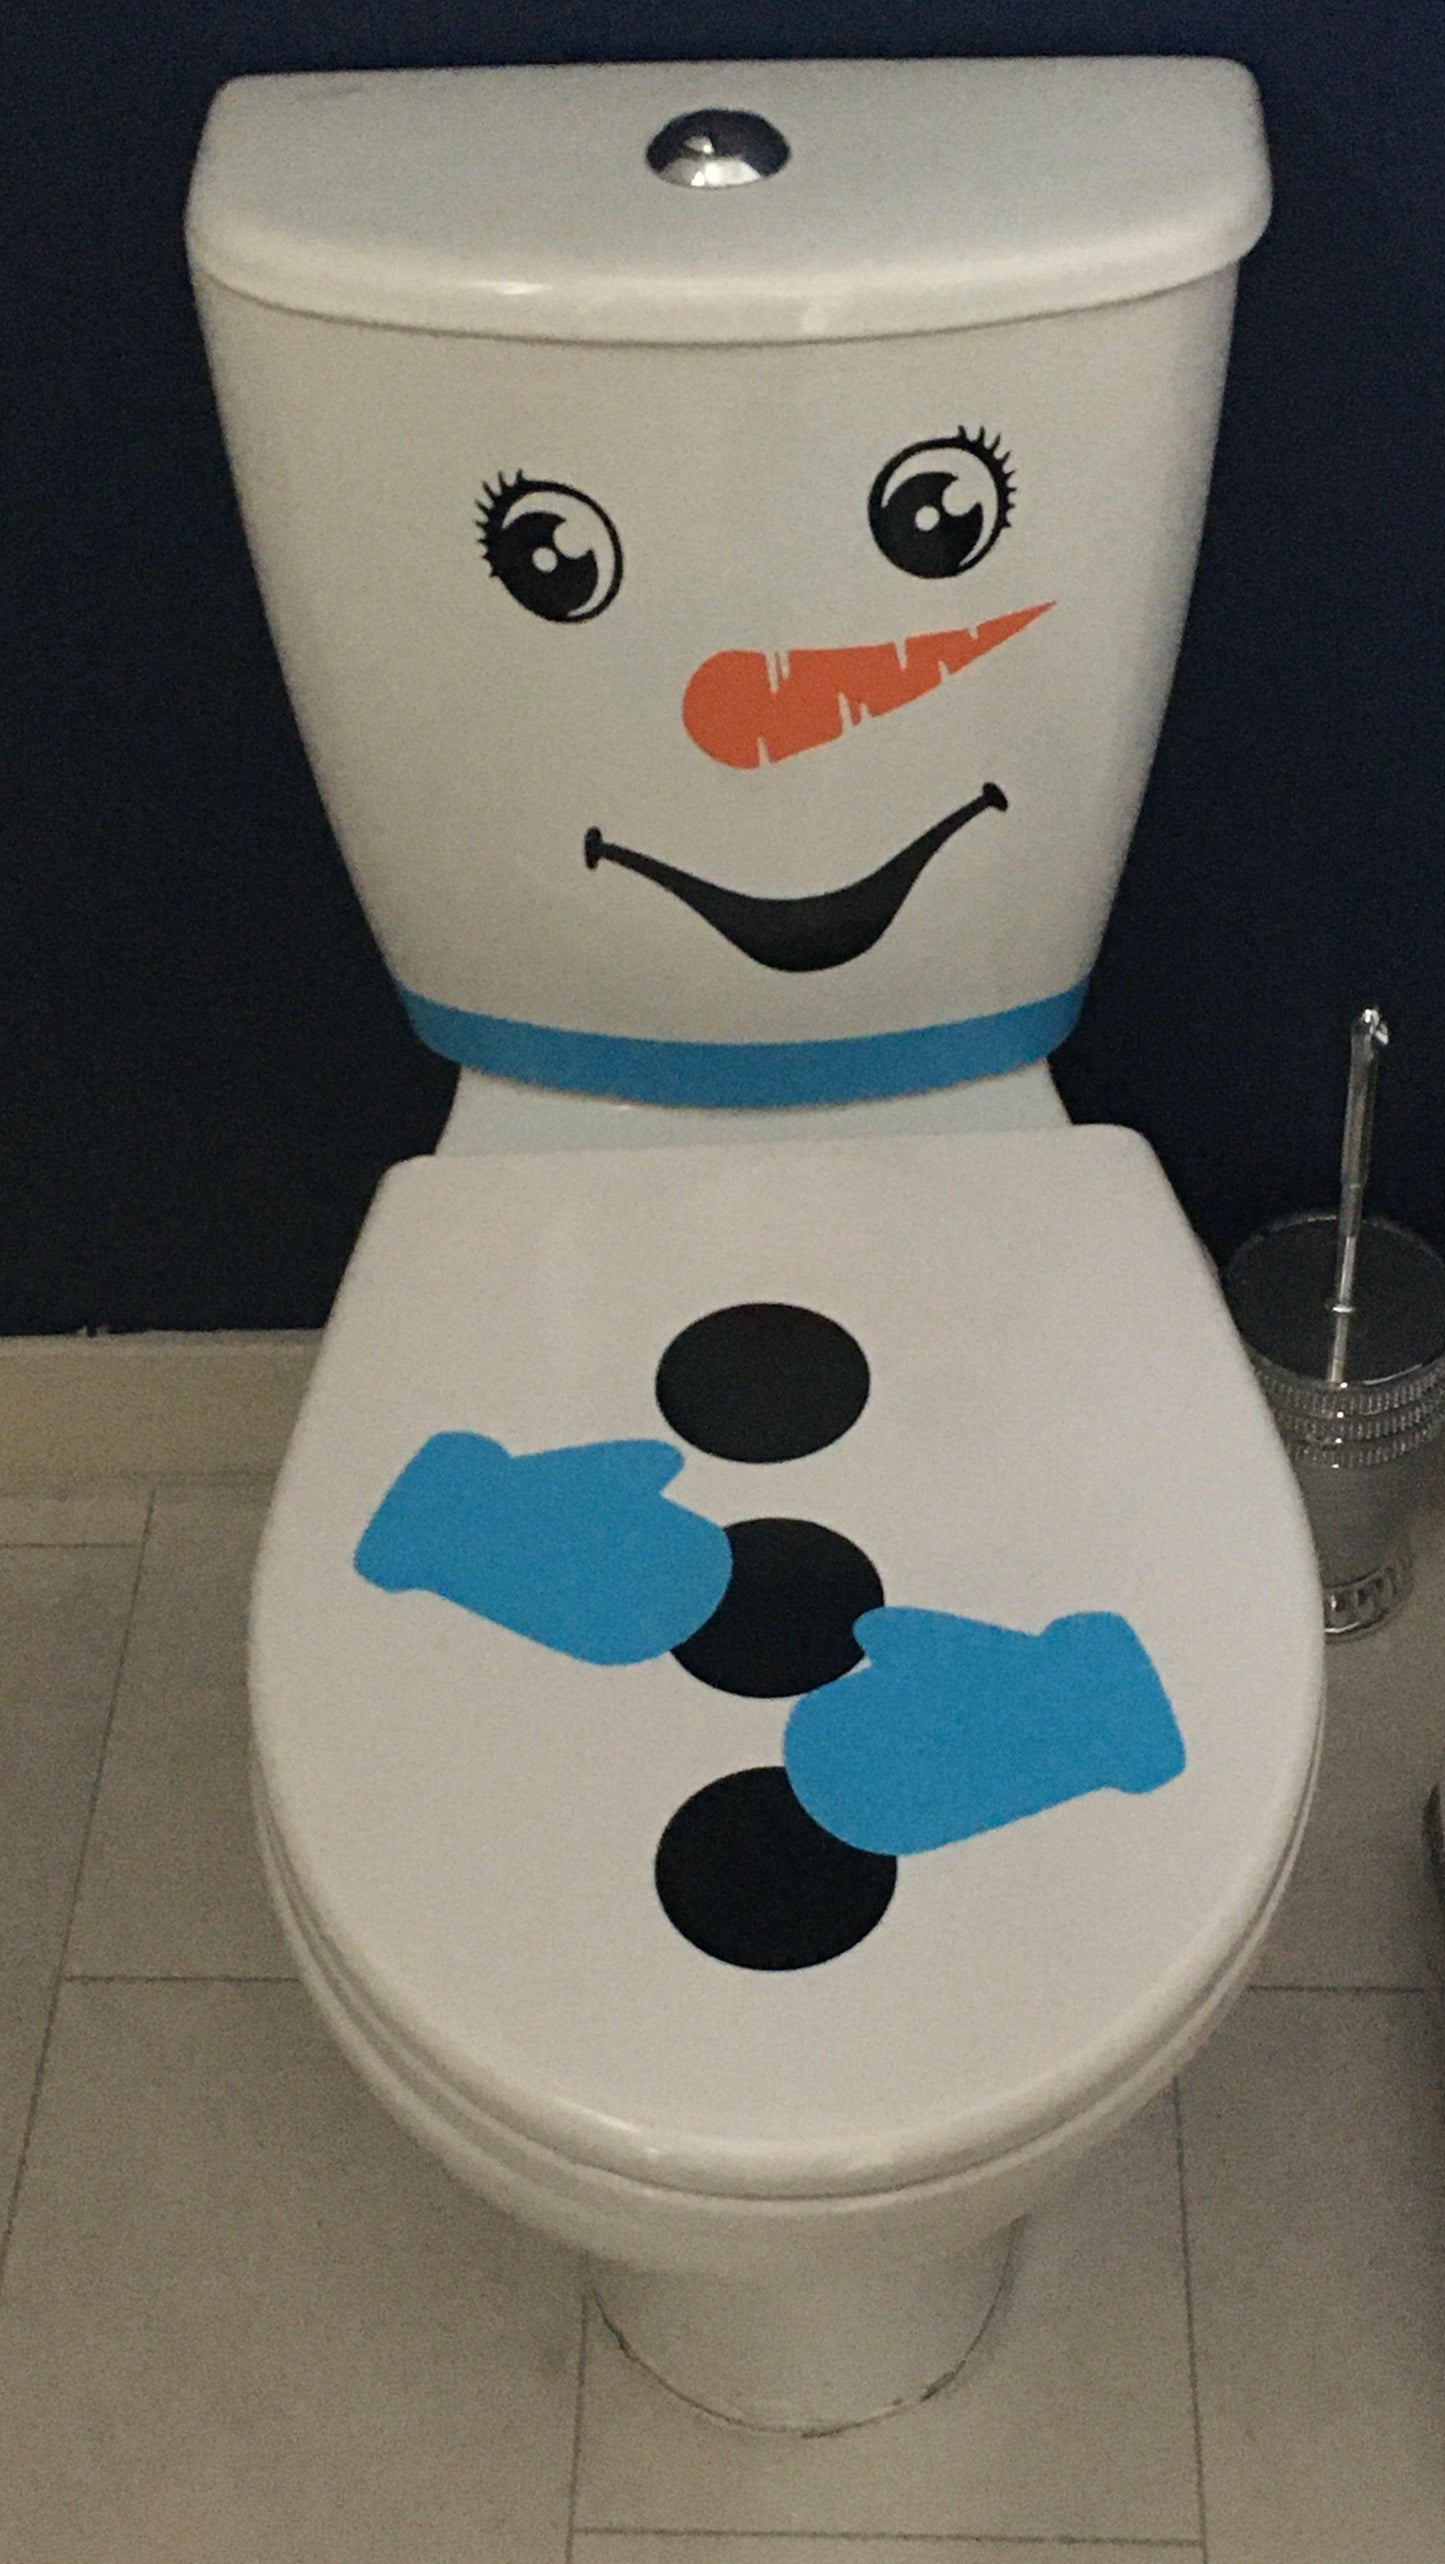 Snowman toilet decal